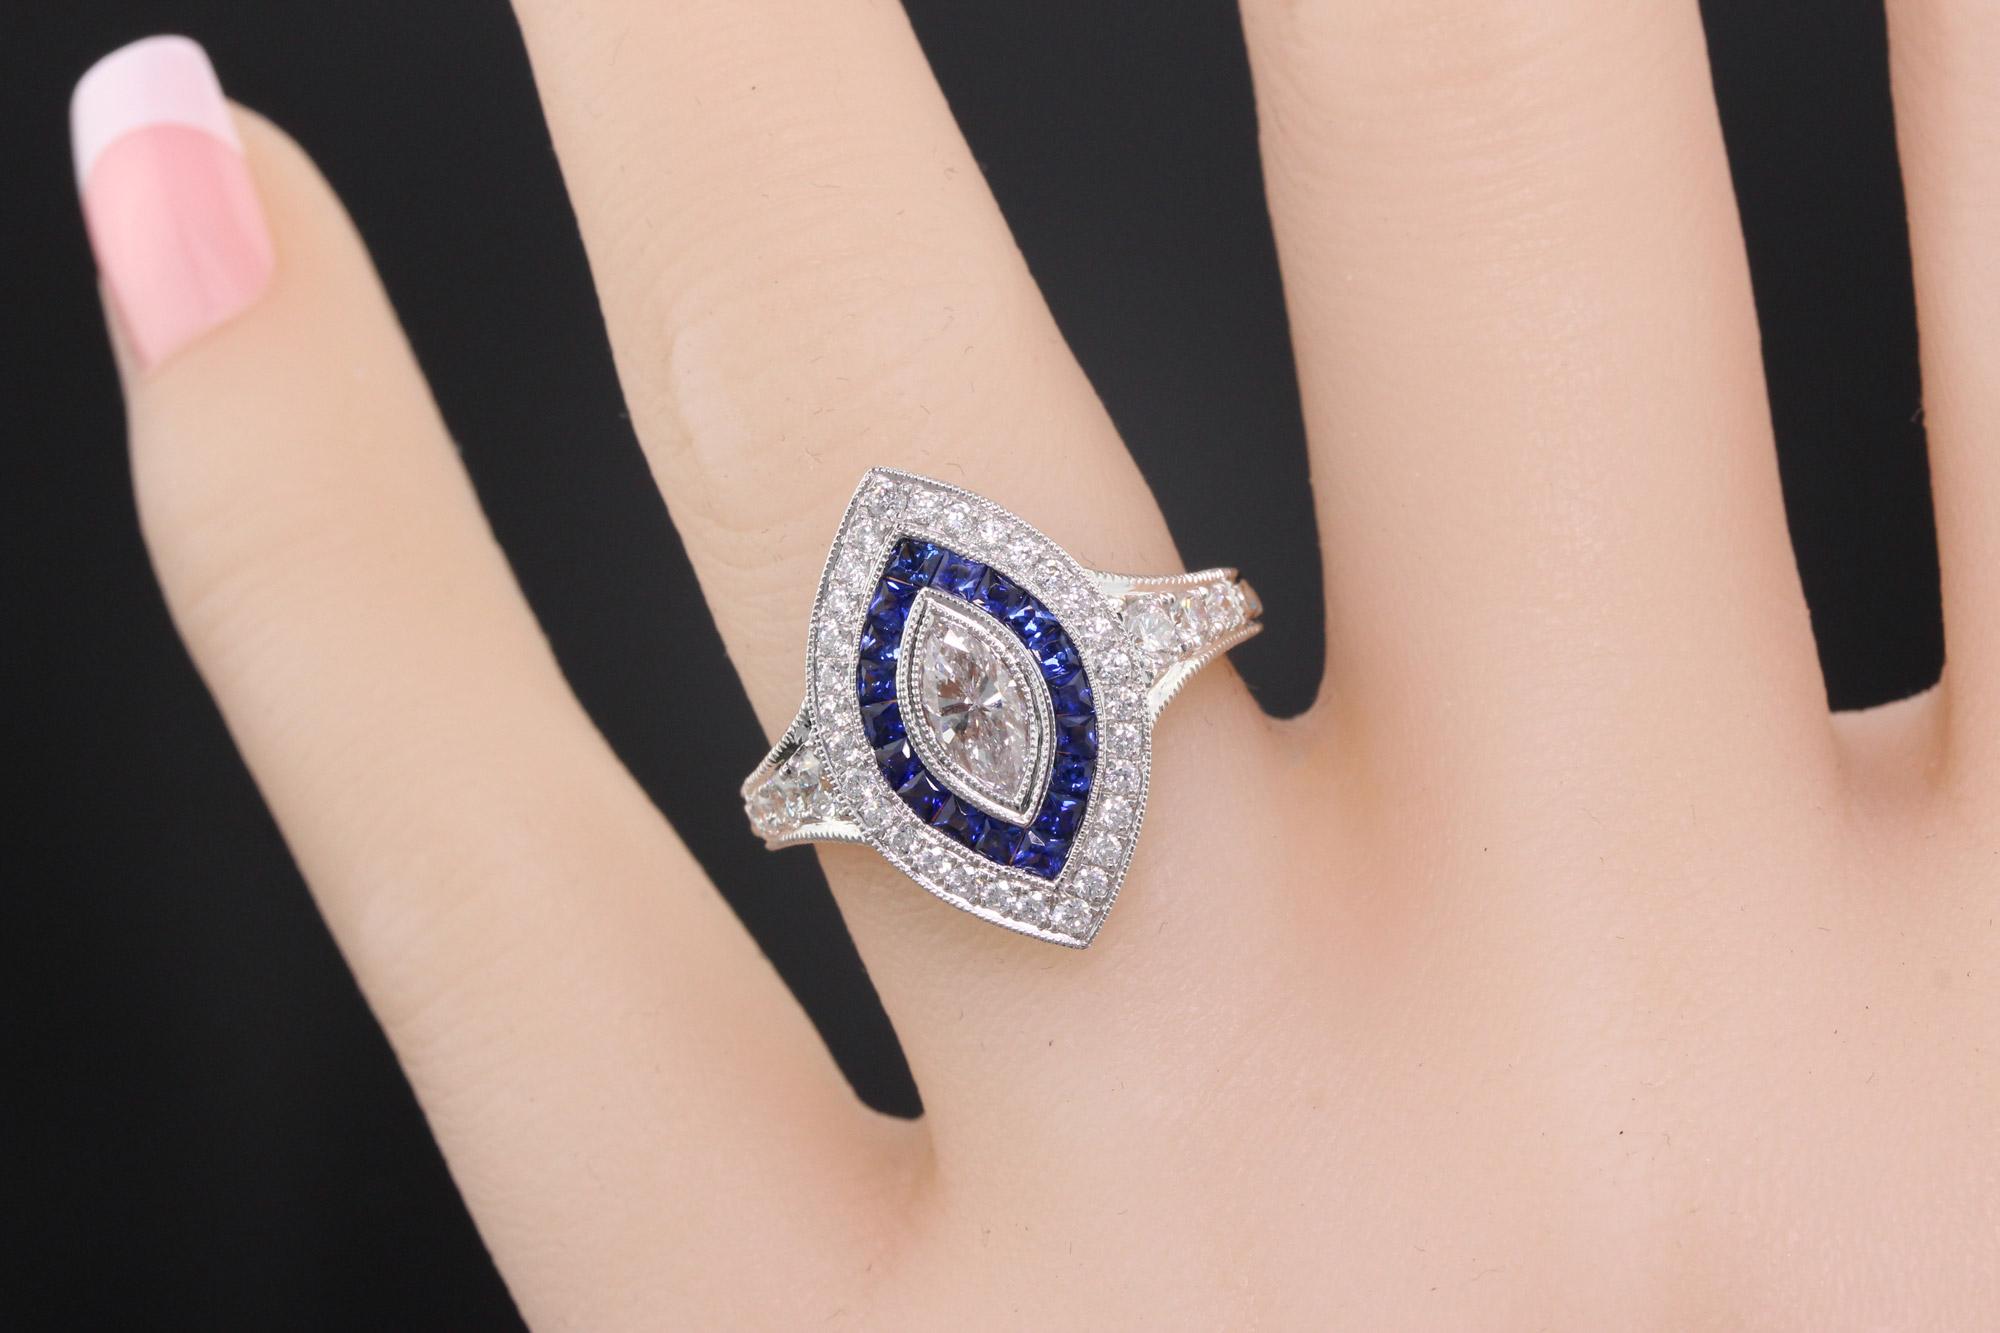 Women's Art Deco Inspired 18 Karat White Gold, Marquise Diamond and Sapphire Ring